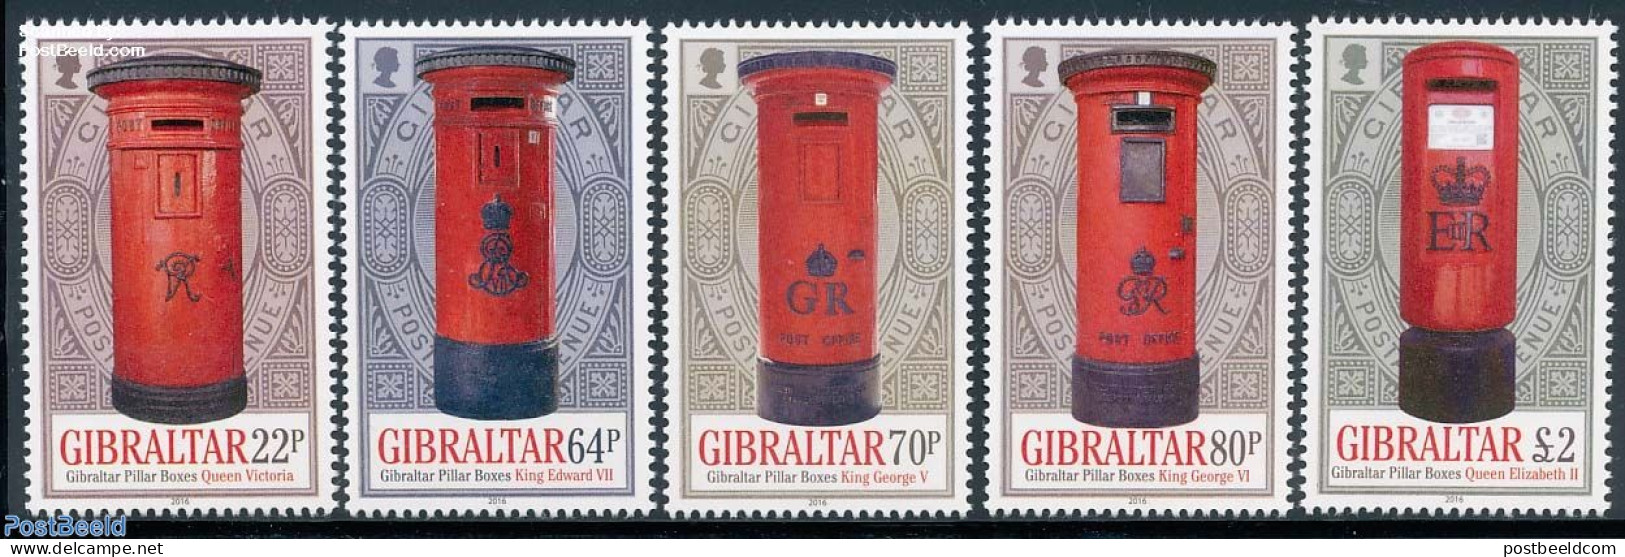 Gibraltar 2016 Gibraltar Pillar Boxes 5v, Mint NH, Mail Boxes - Post - Stamps On Stamps - Post